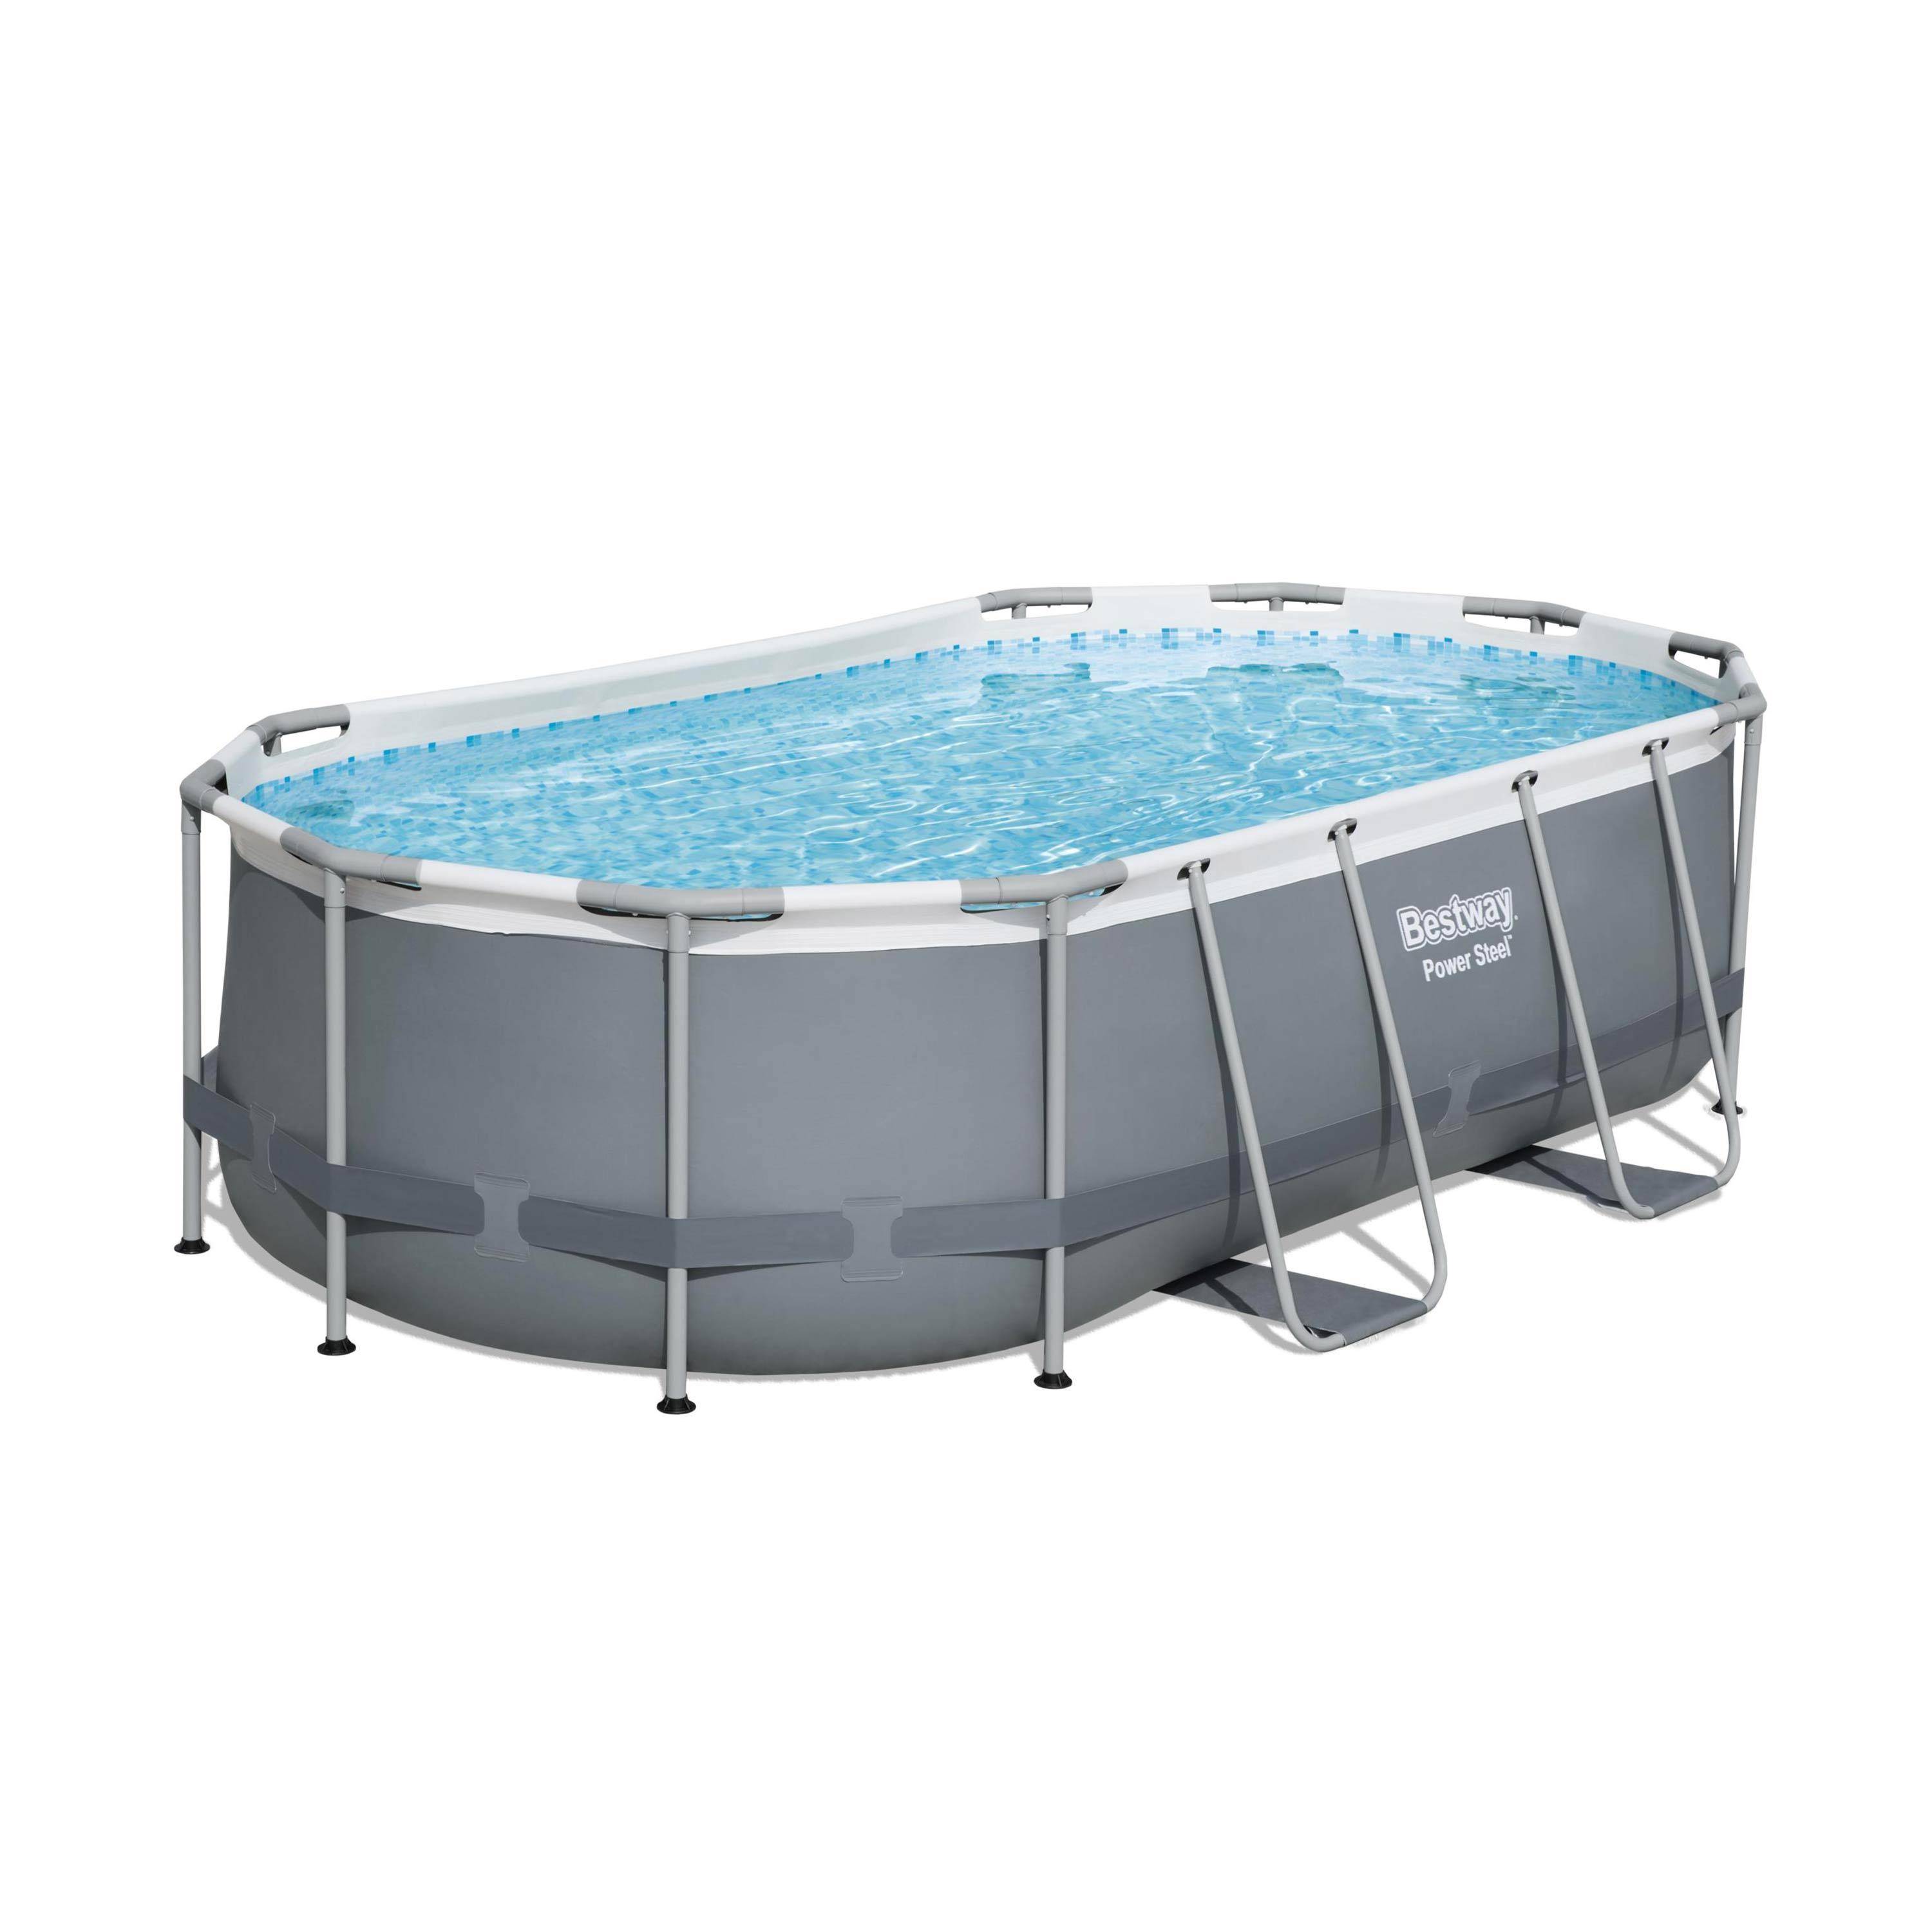 Compleet BESTWAY zwembad – Spinelle grijs – Ovaal frame zwembad 4x2 m, inclusief filterpomp, 3-trapsladder en vlotter Photo2